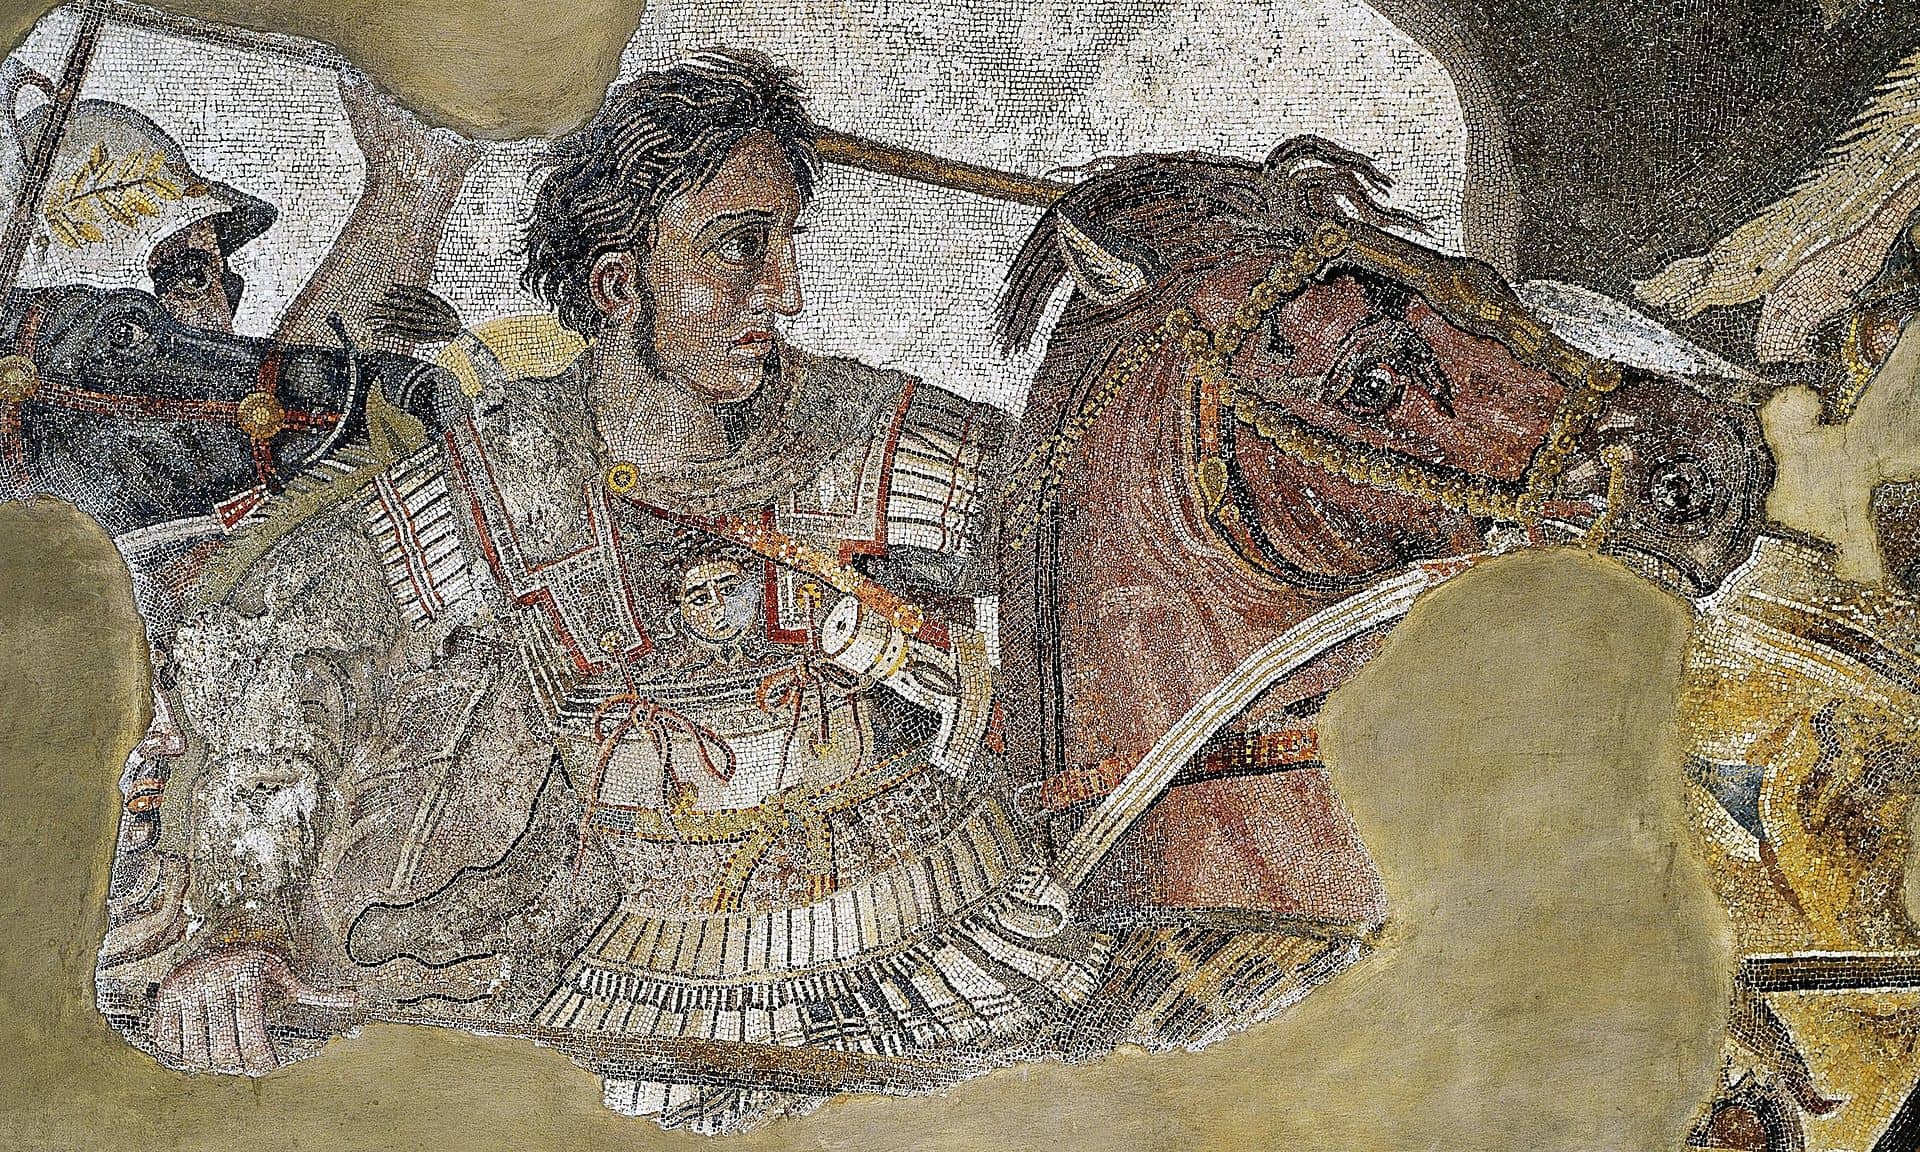 Mosiac Alexander the Great